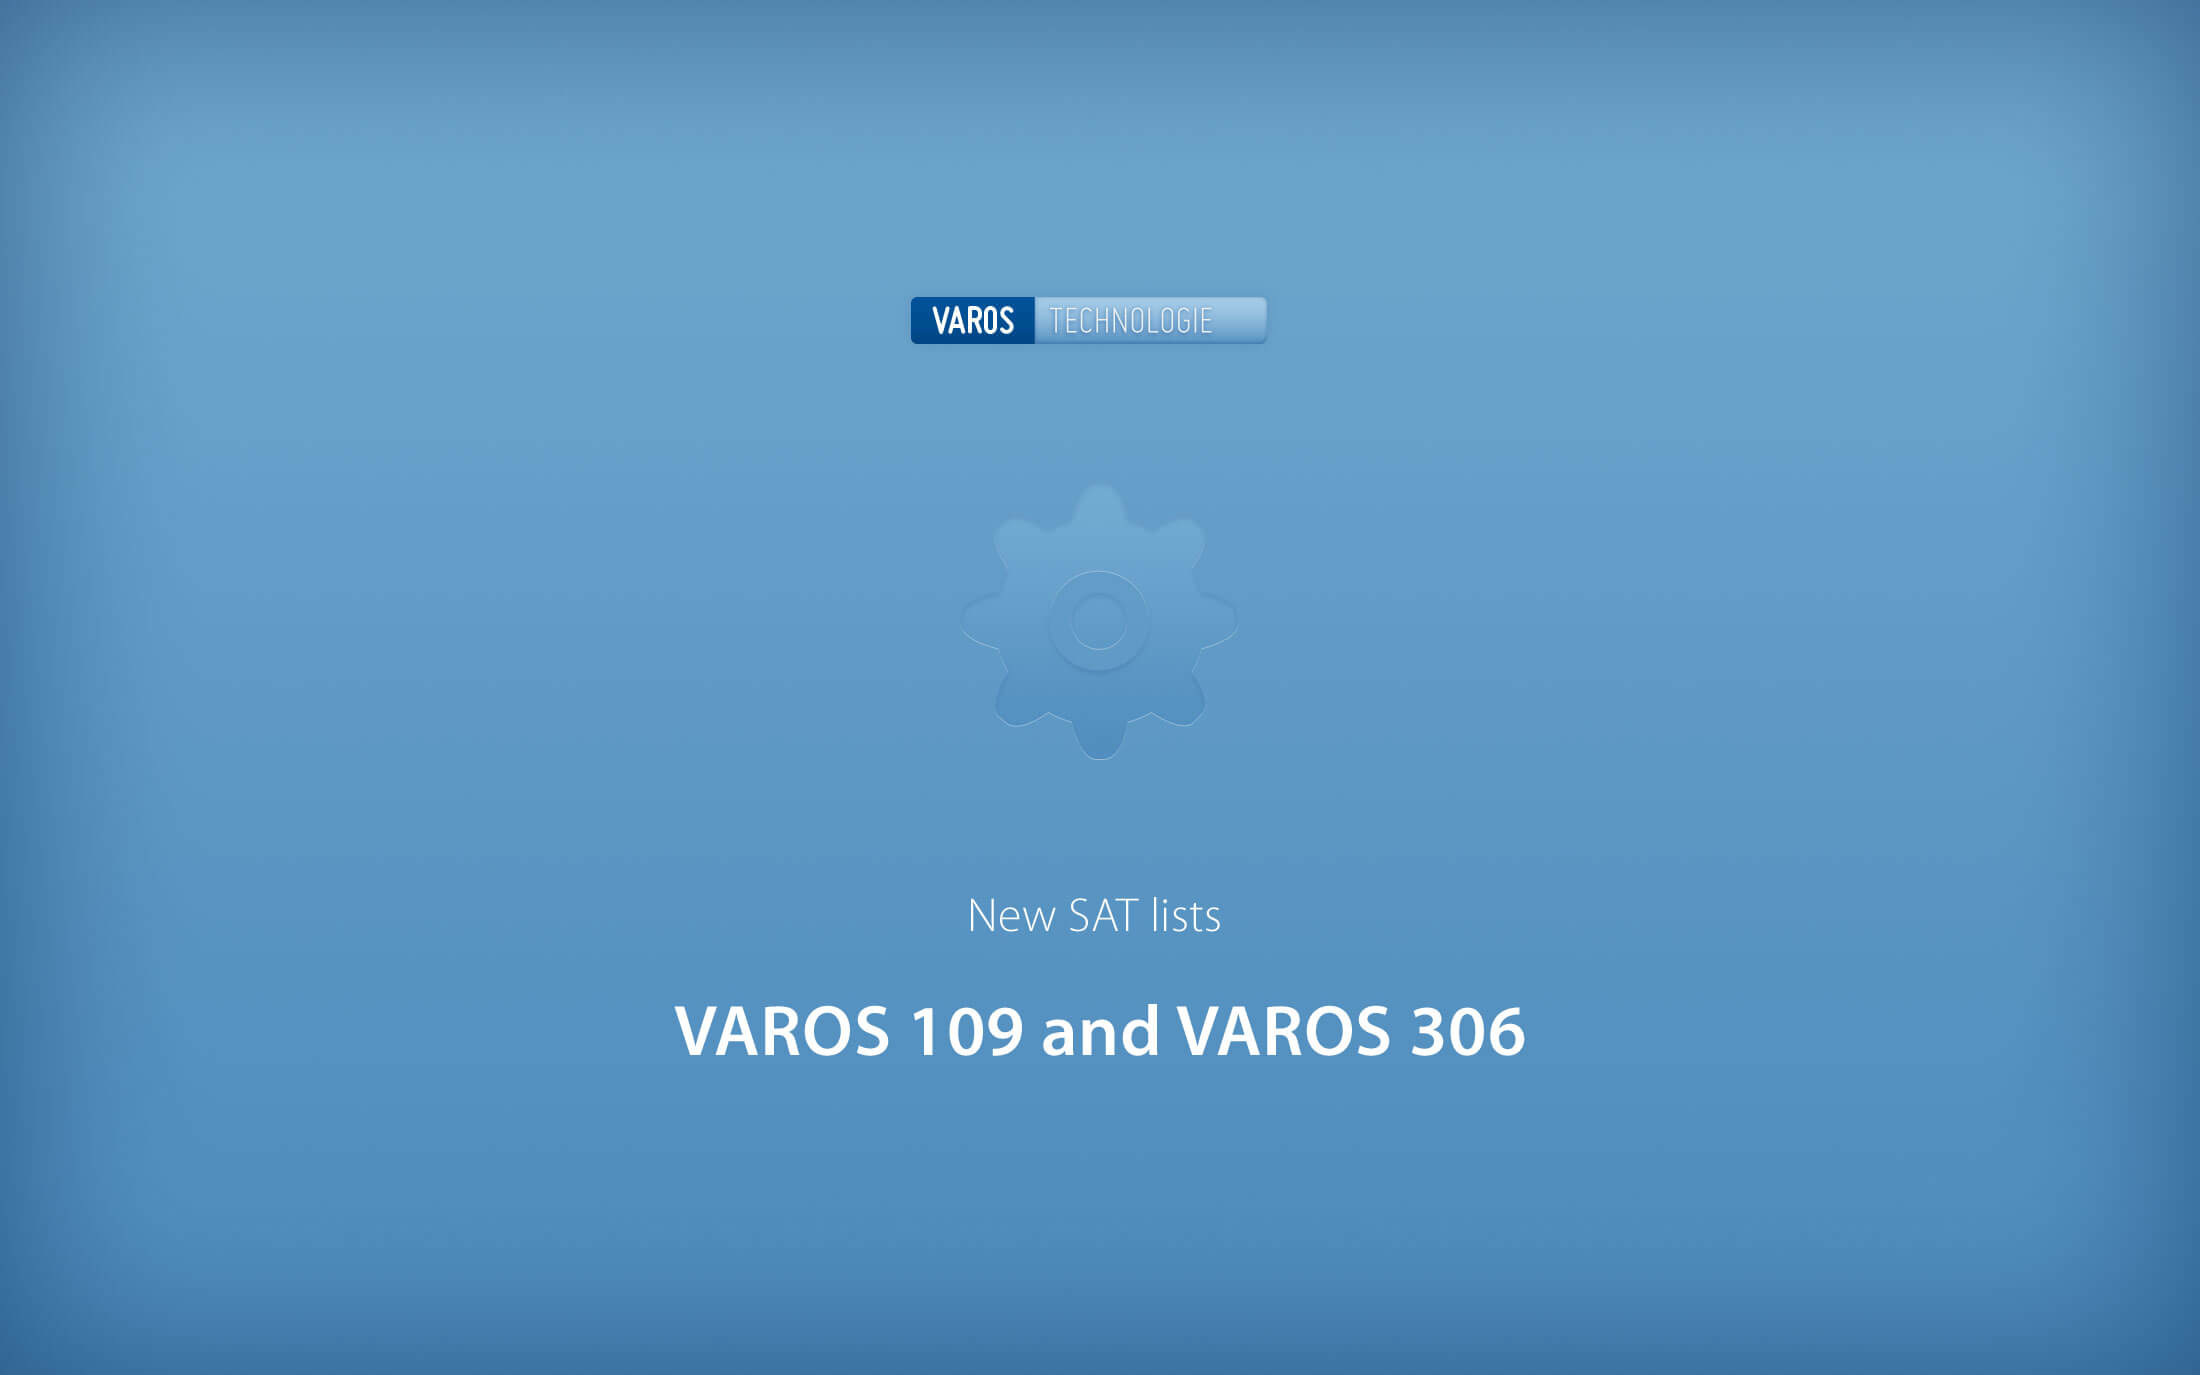 KWS-Electronic VAROS 109: New SAT lists